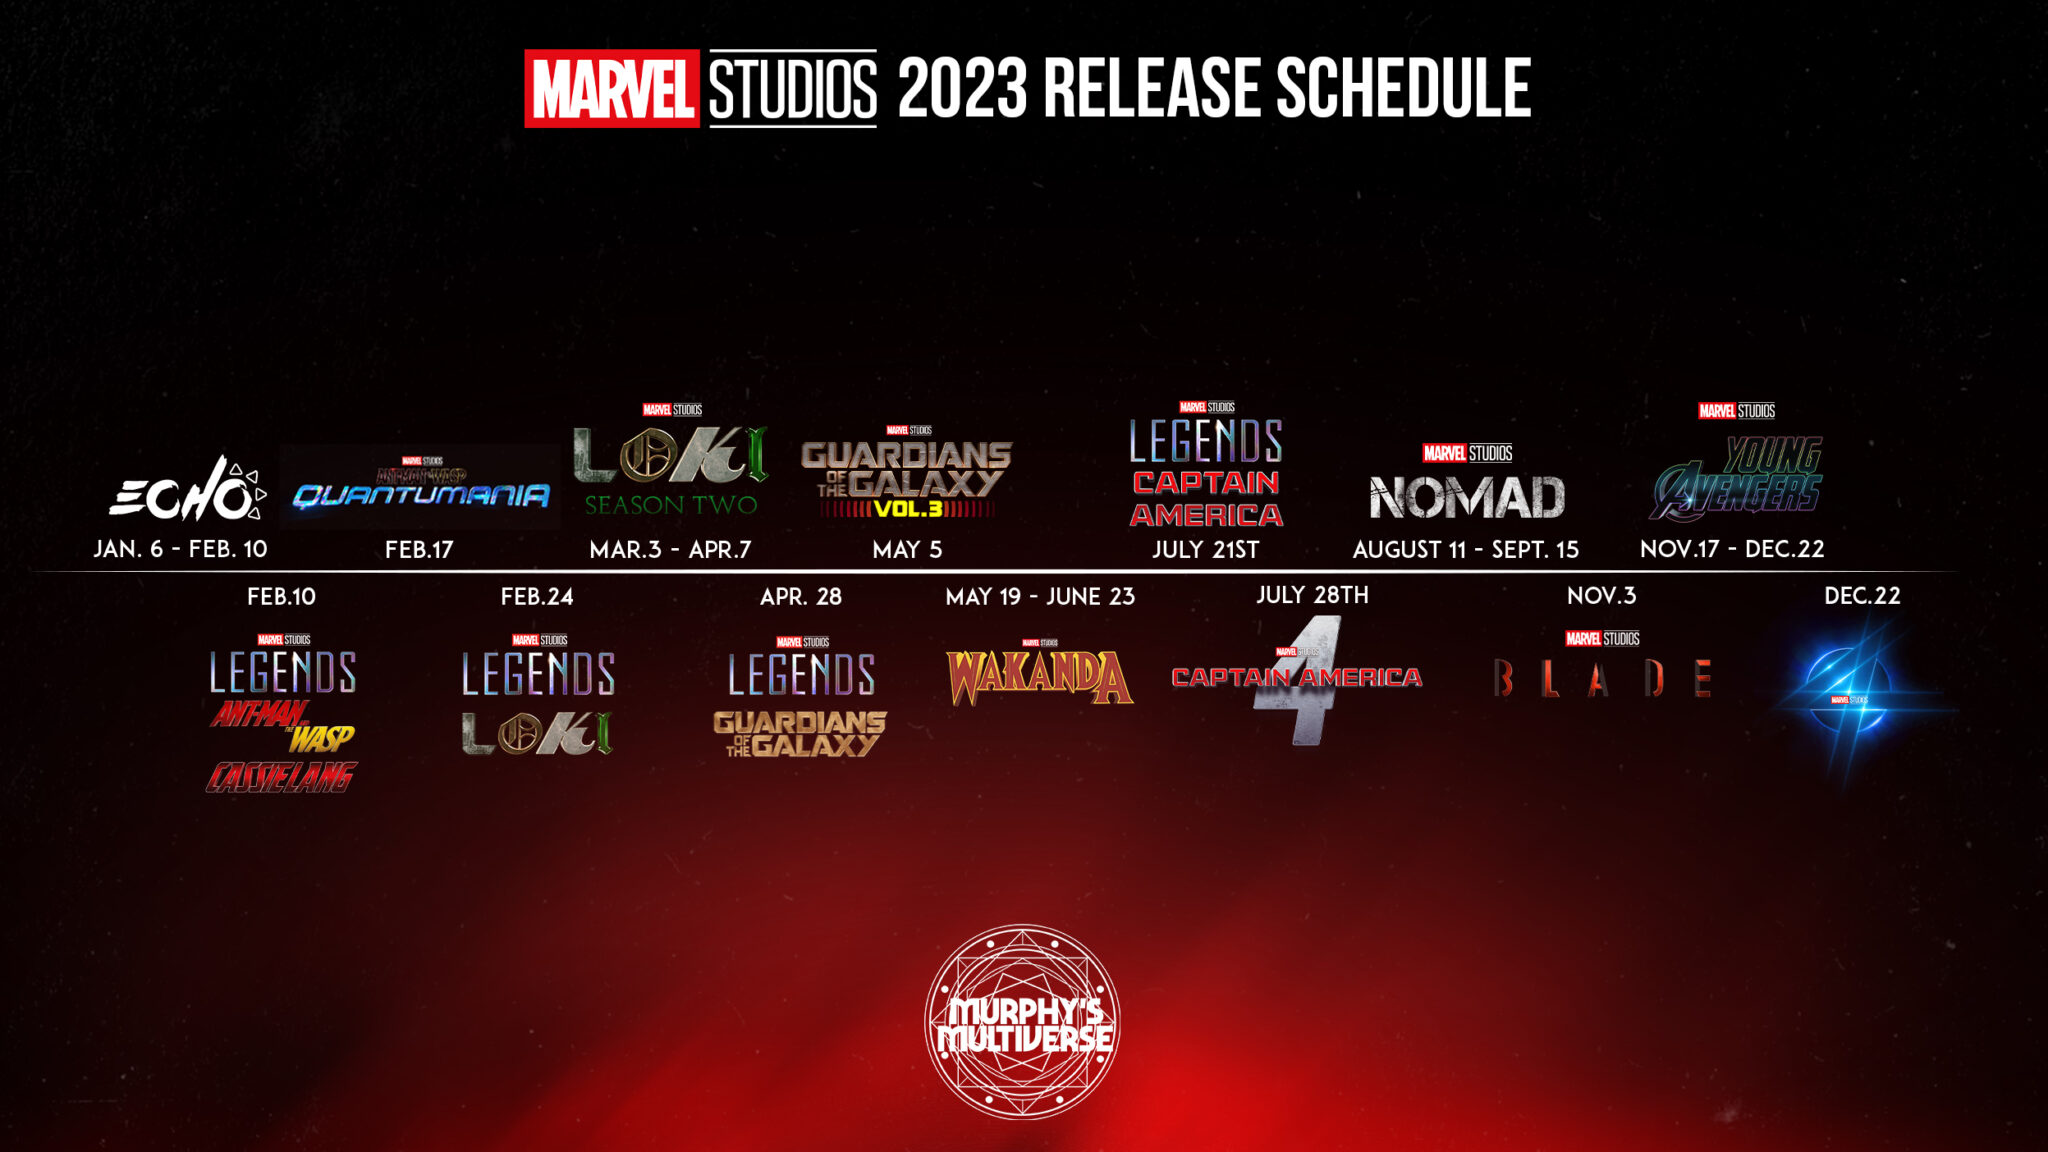 Deep Thoughts One Hypothetical Marvel Studios 2023 Release Calendar